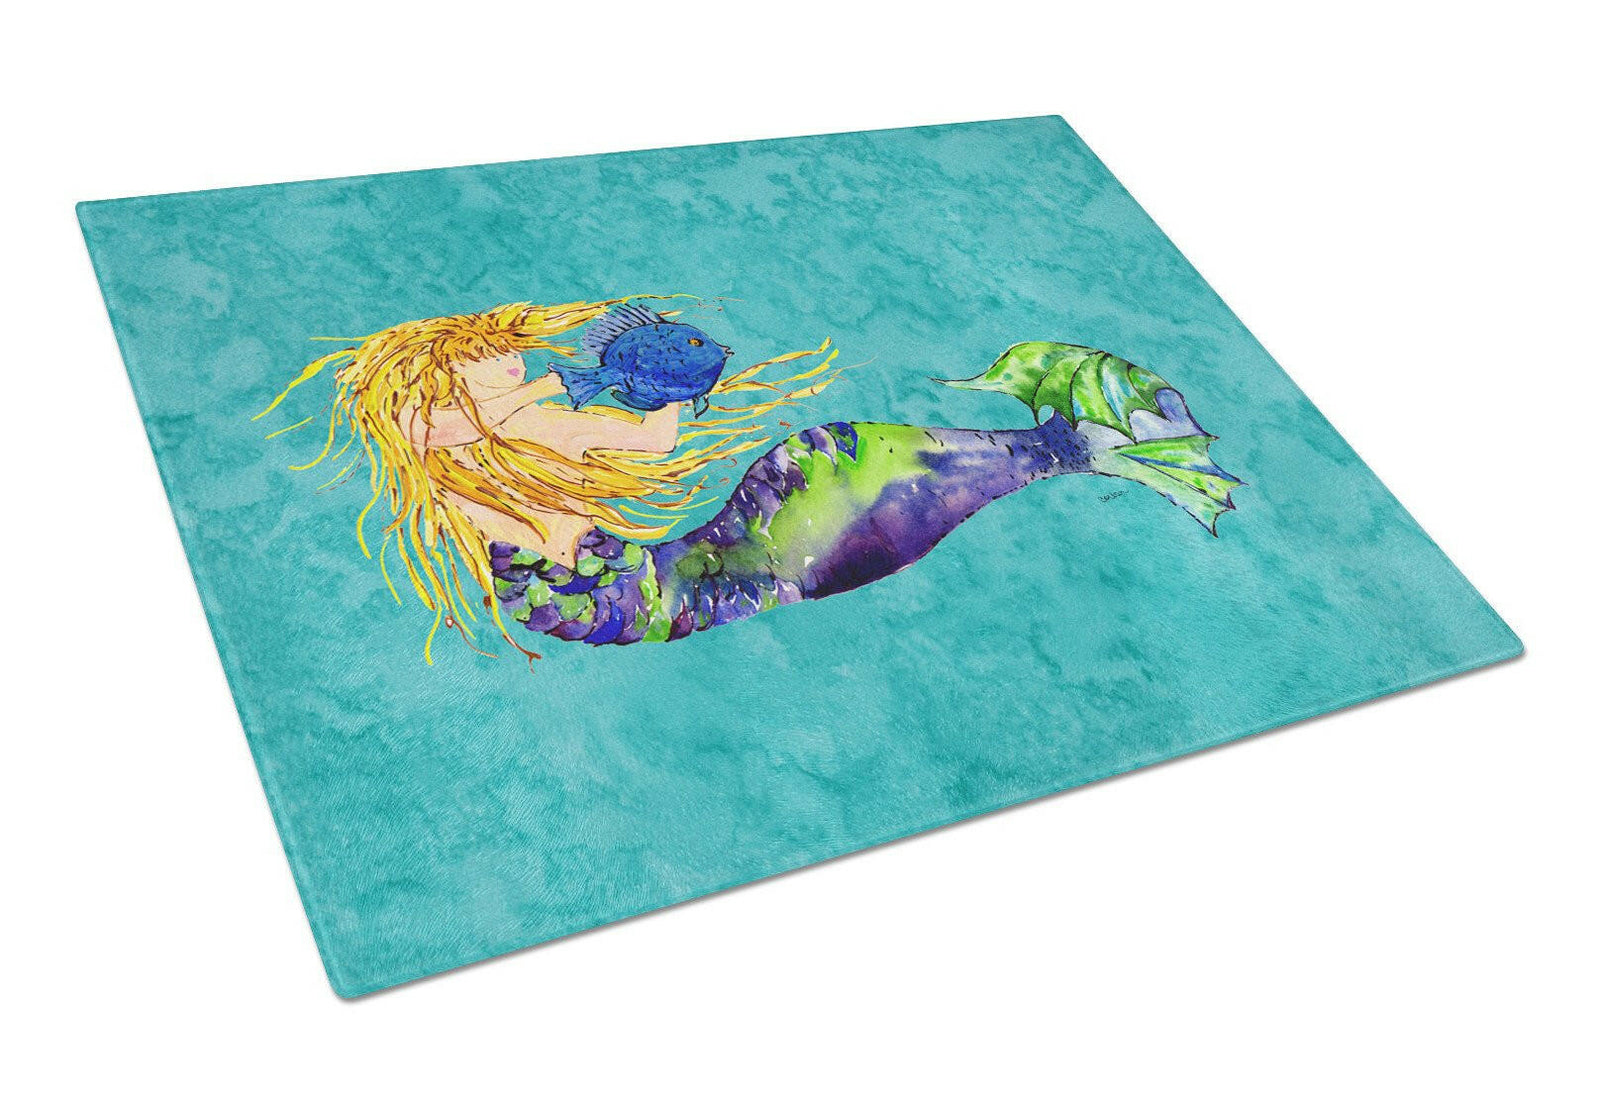 Blonde Mermaid on Teal Glass Cutting Board Large 8724LCB by Caroline's Treasures